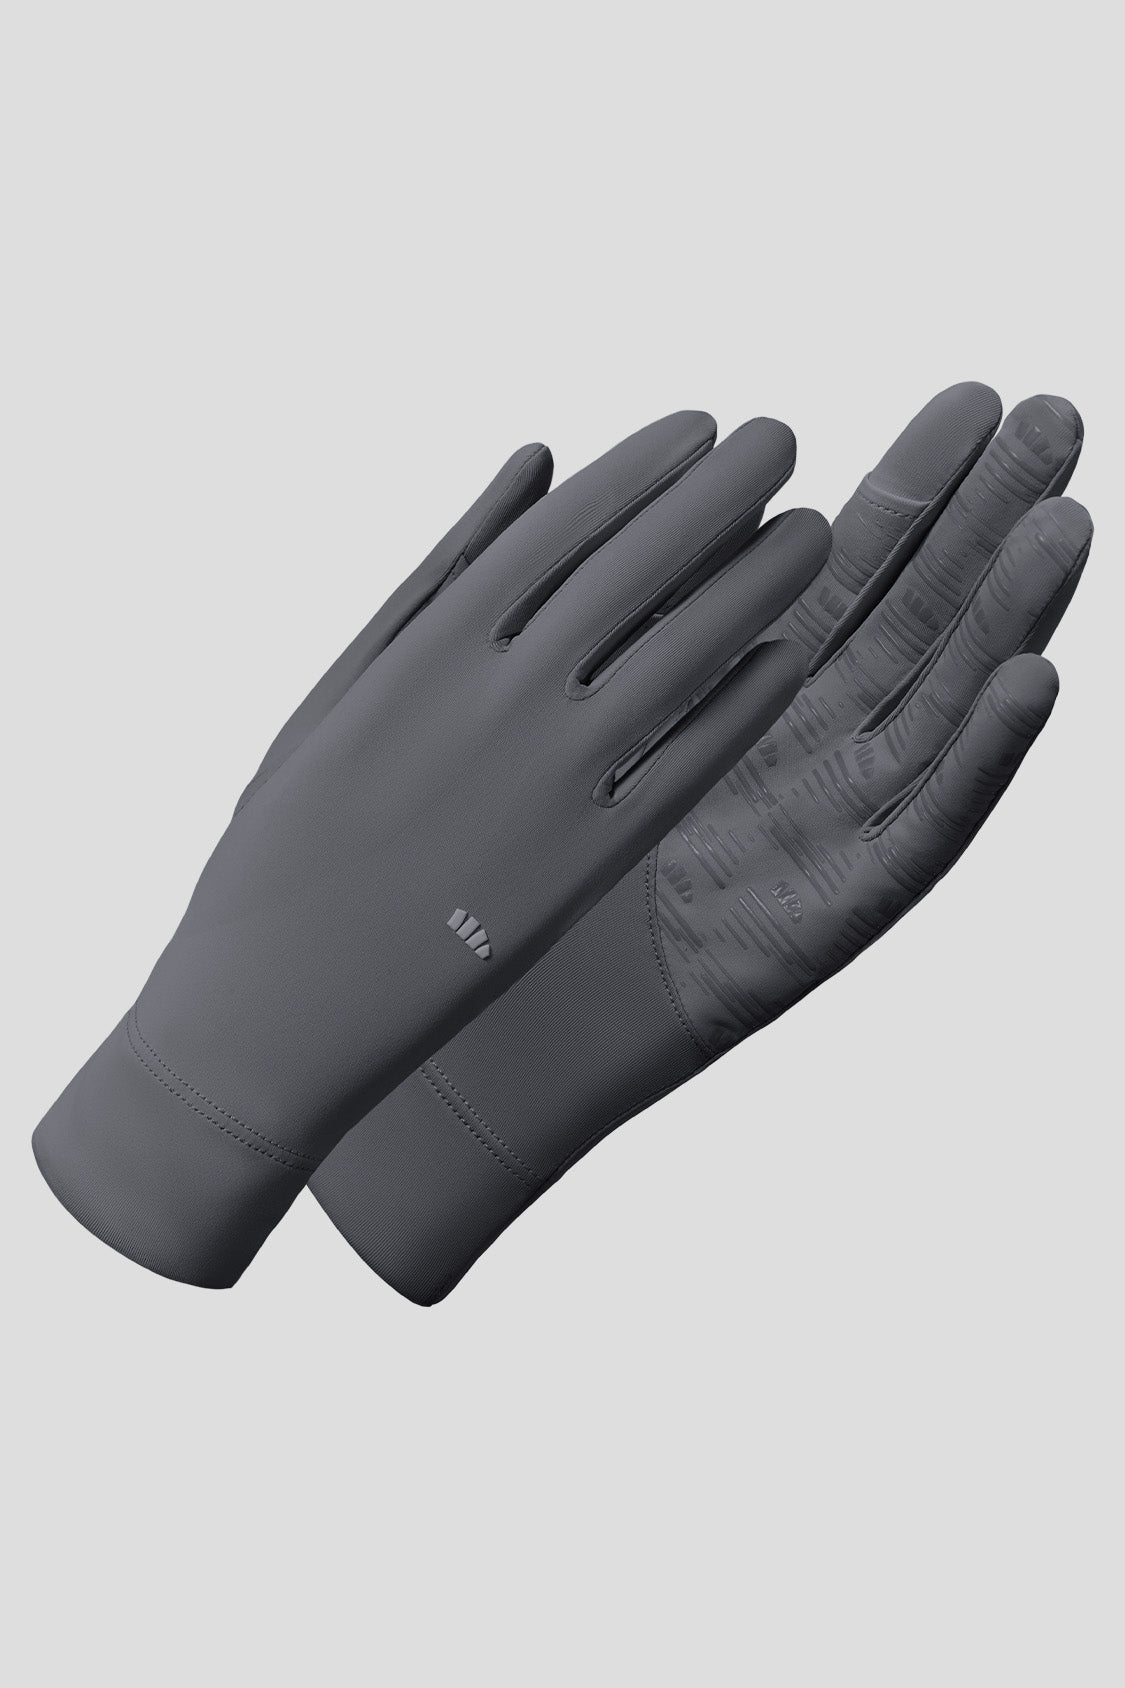 Sun Protection Gloves